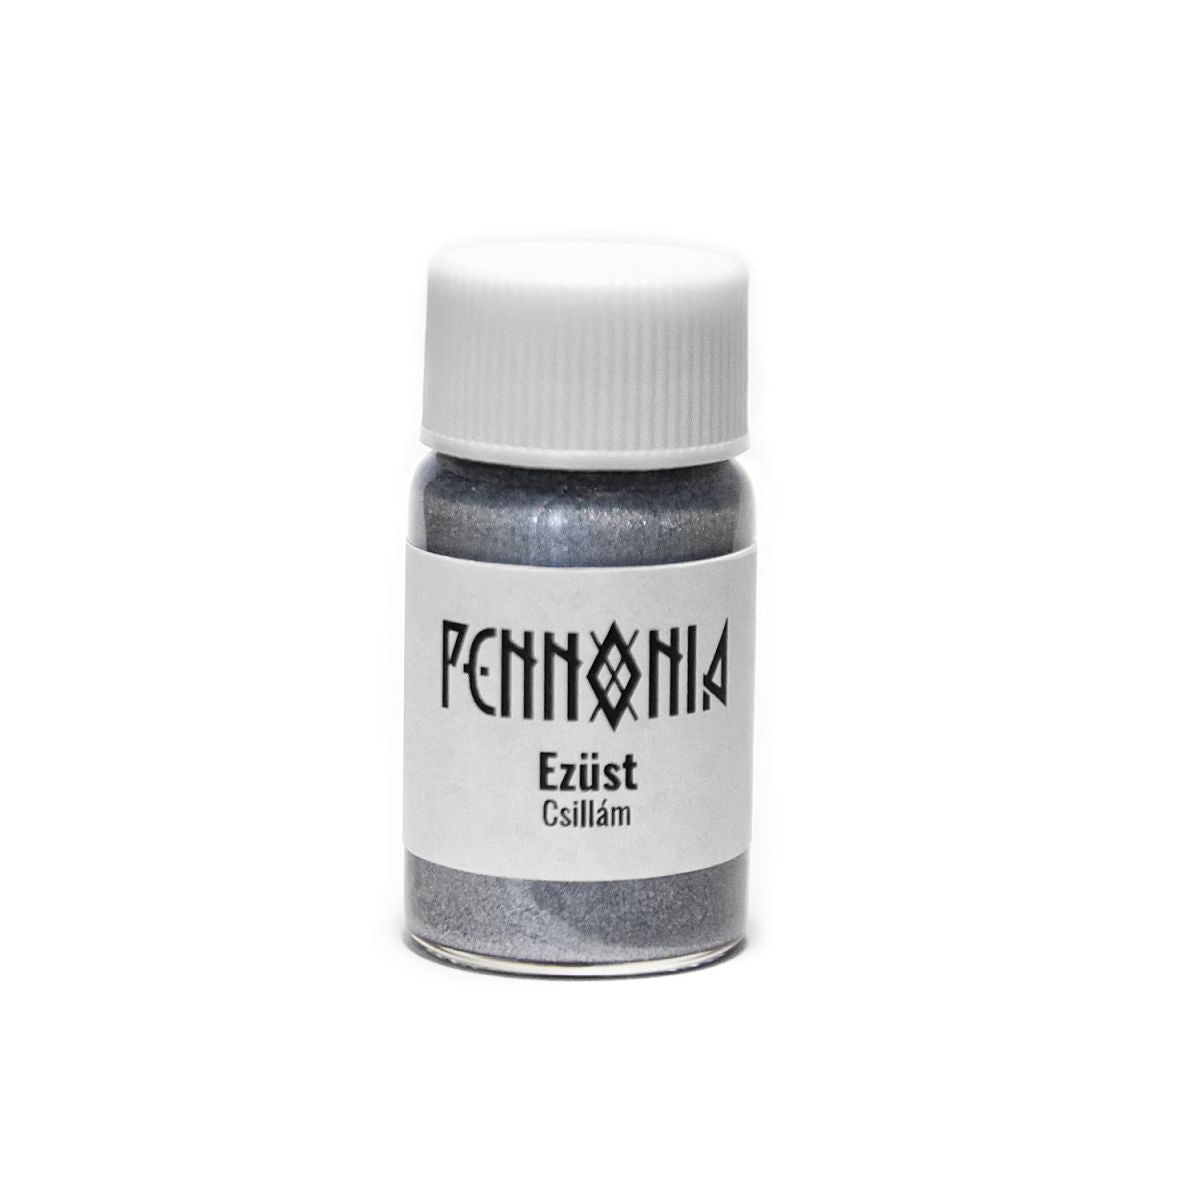 Pennonia shimmer additive - Ezust